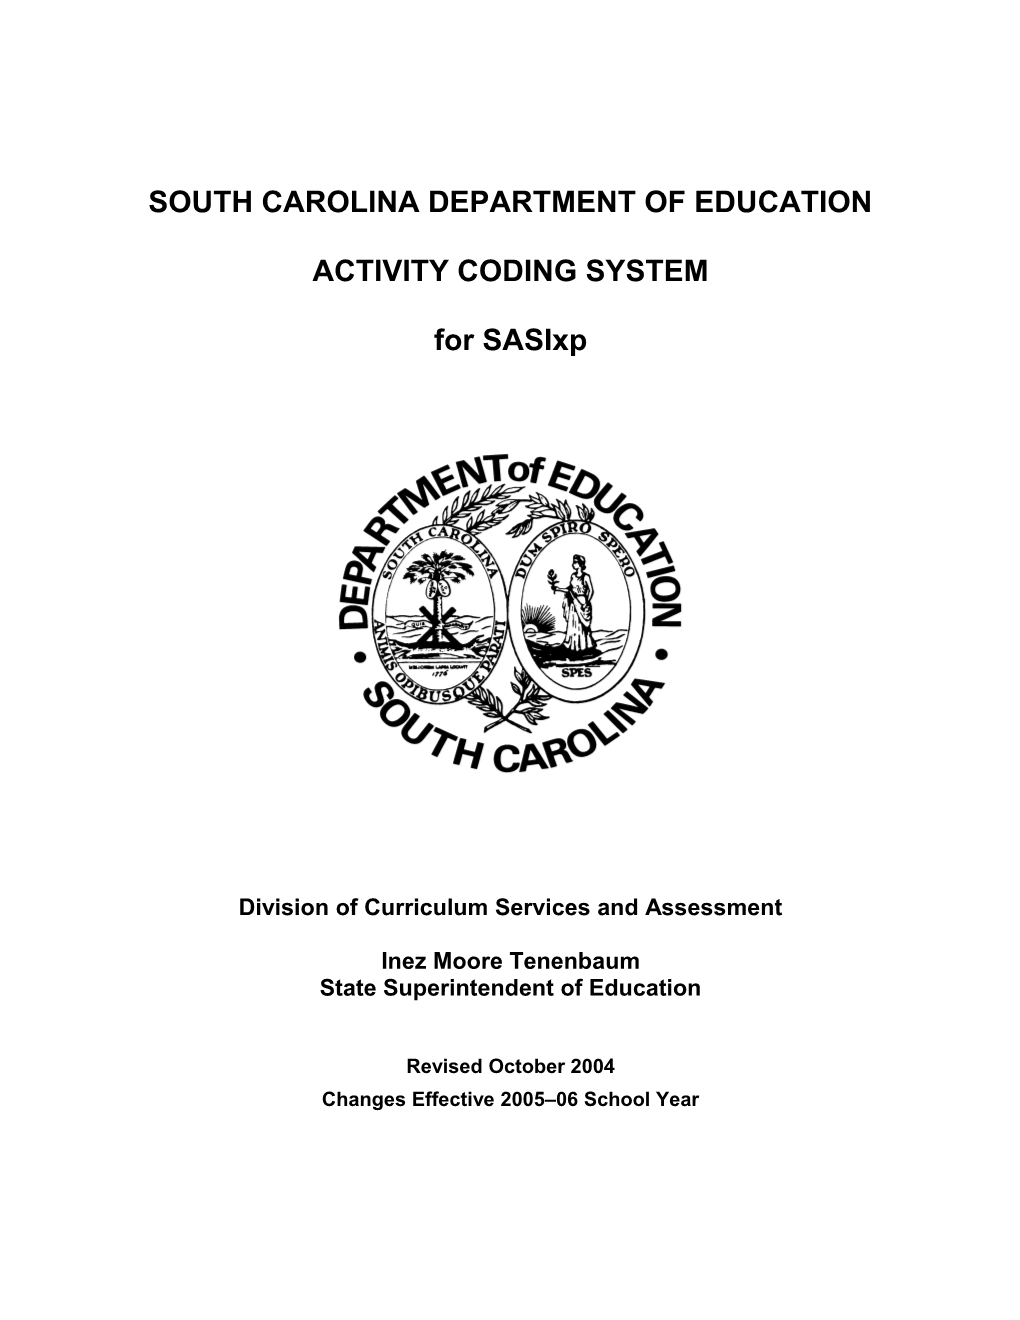 South Carolina Department of Education s1